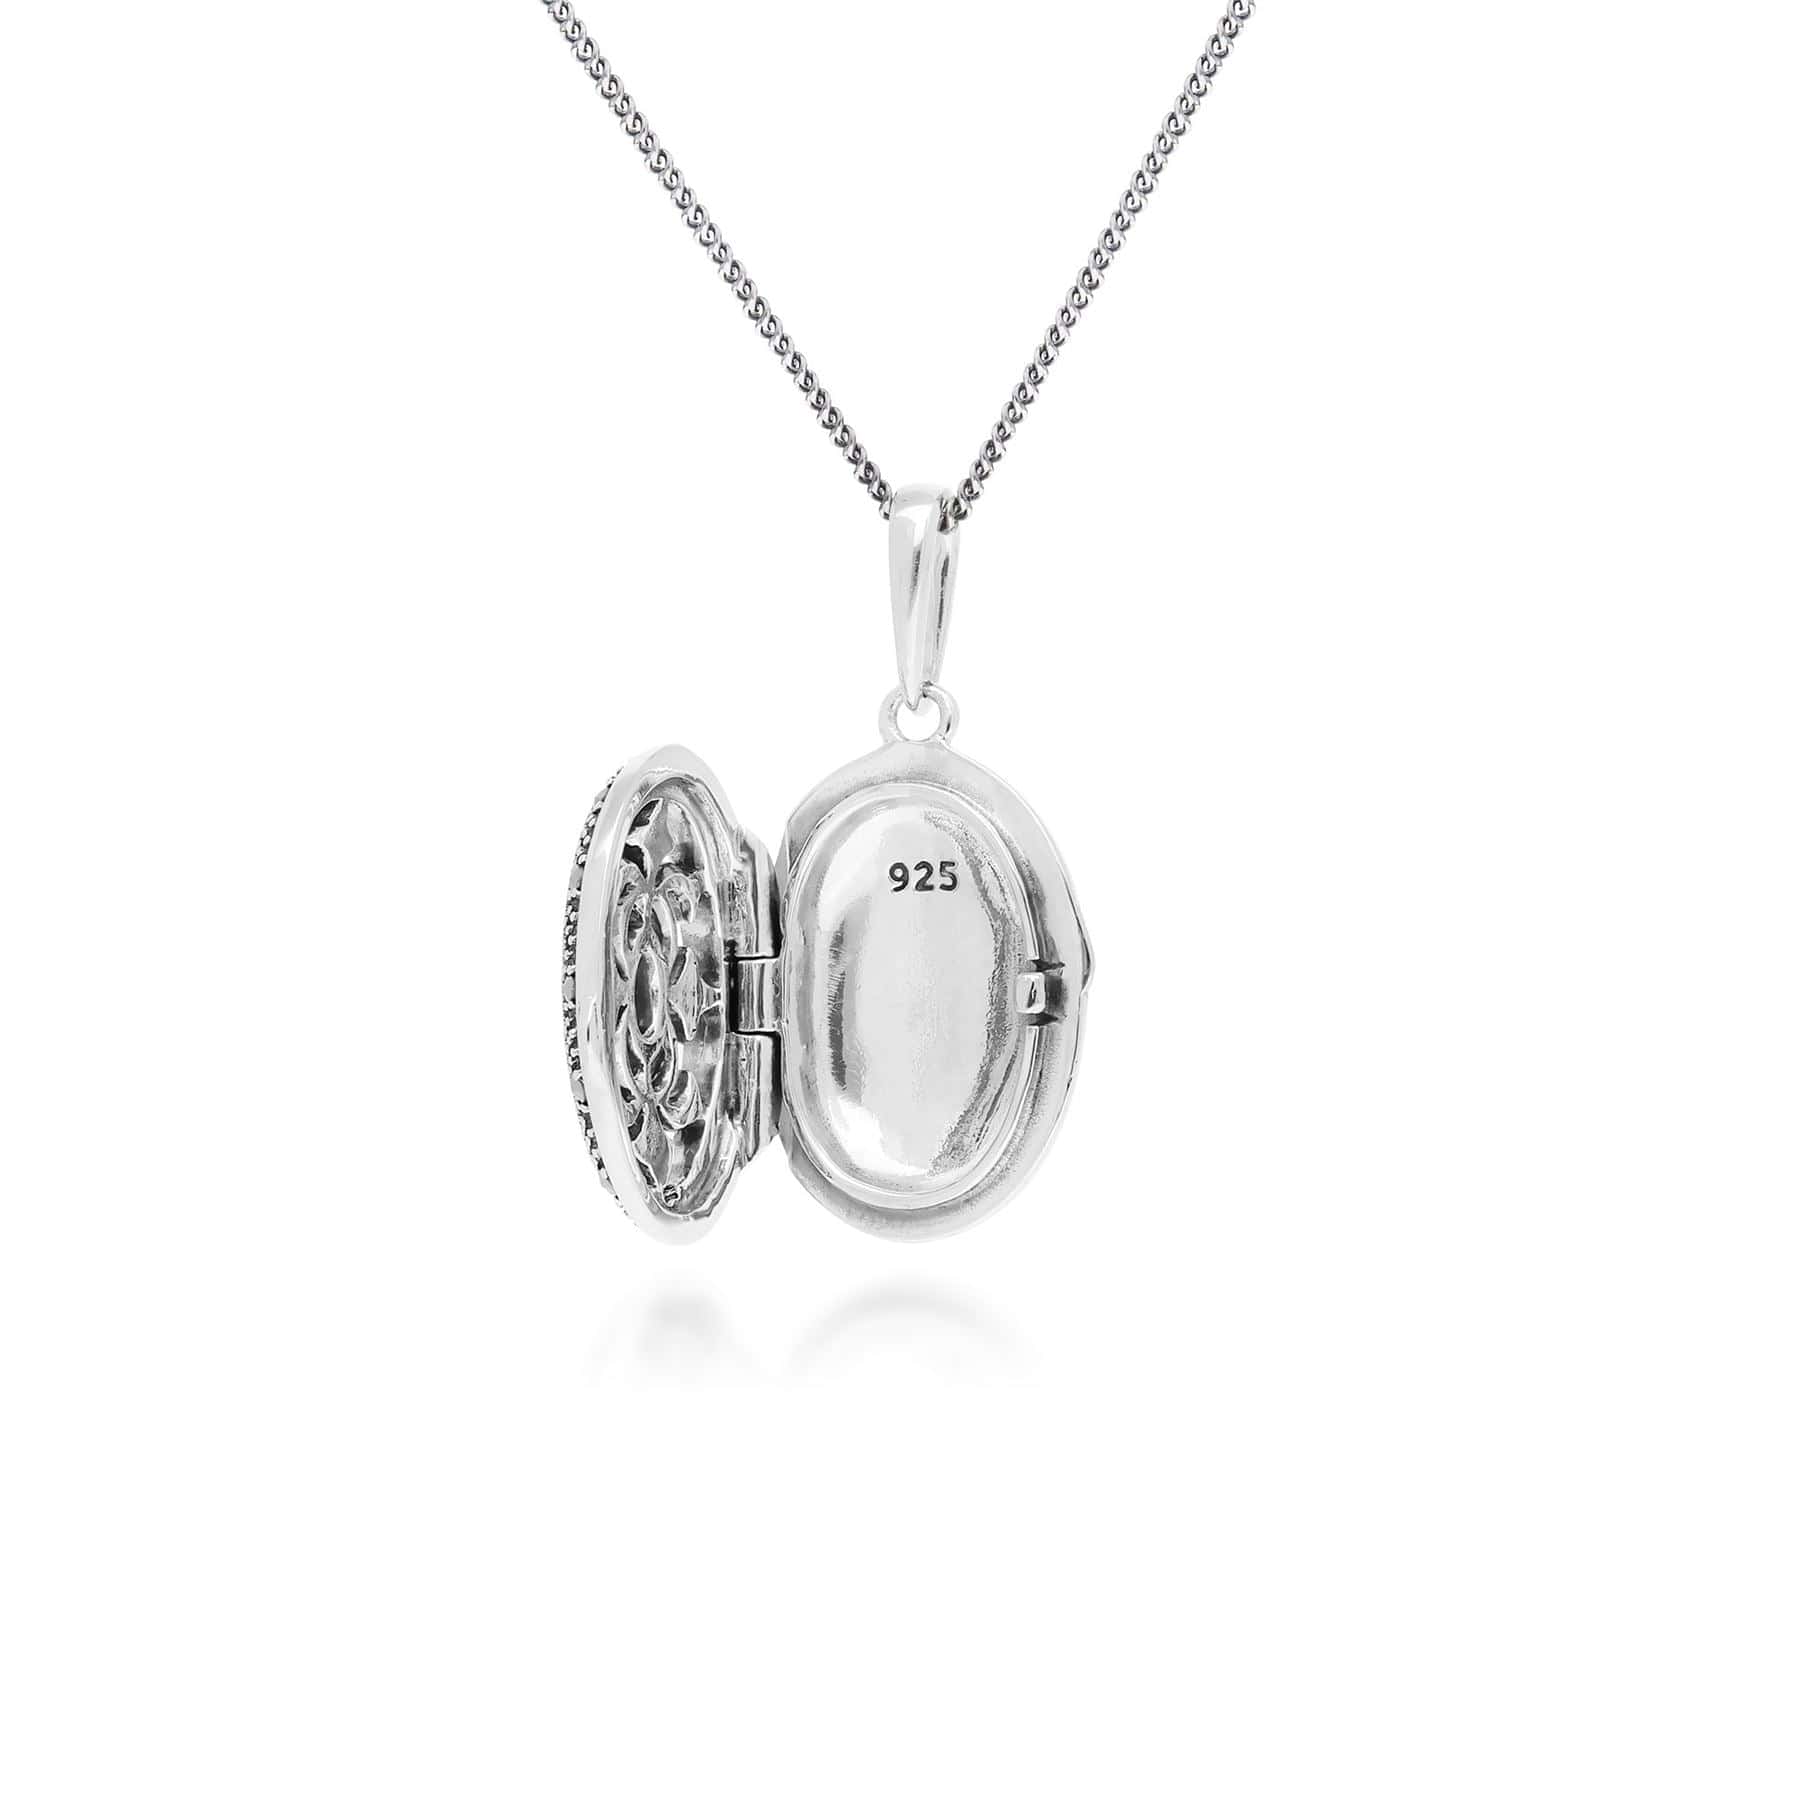 Art Nouveau Style Oval Peridot & Marcasite Locket Necklace in 925 Sterling Silver - Gemondo